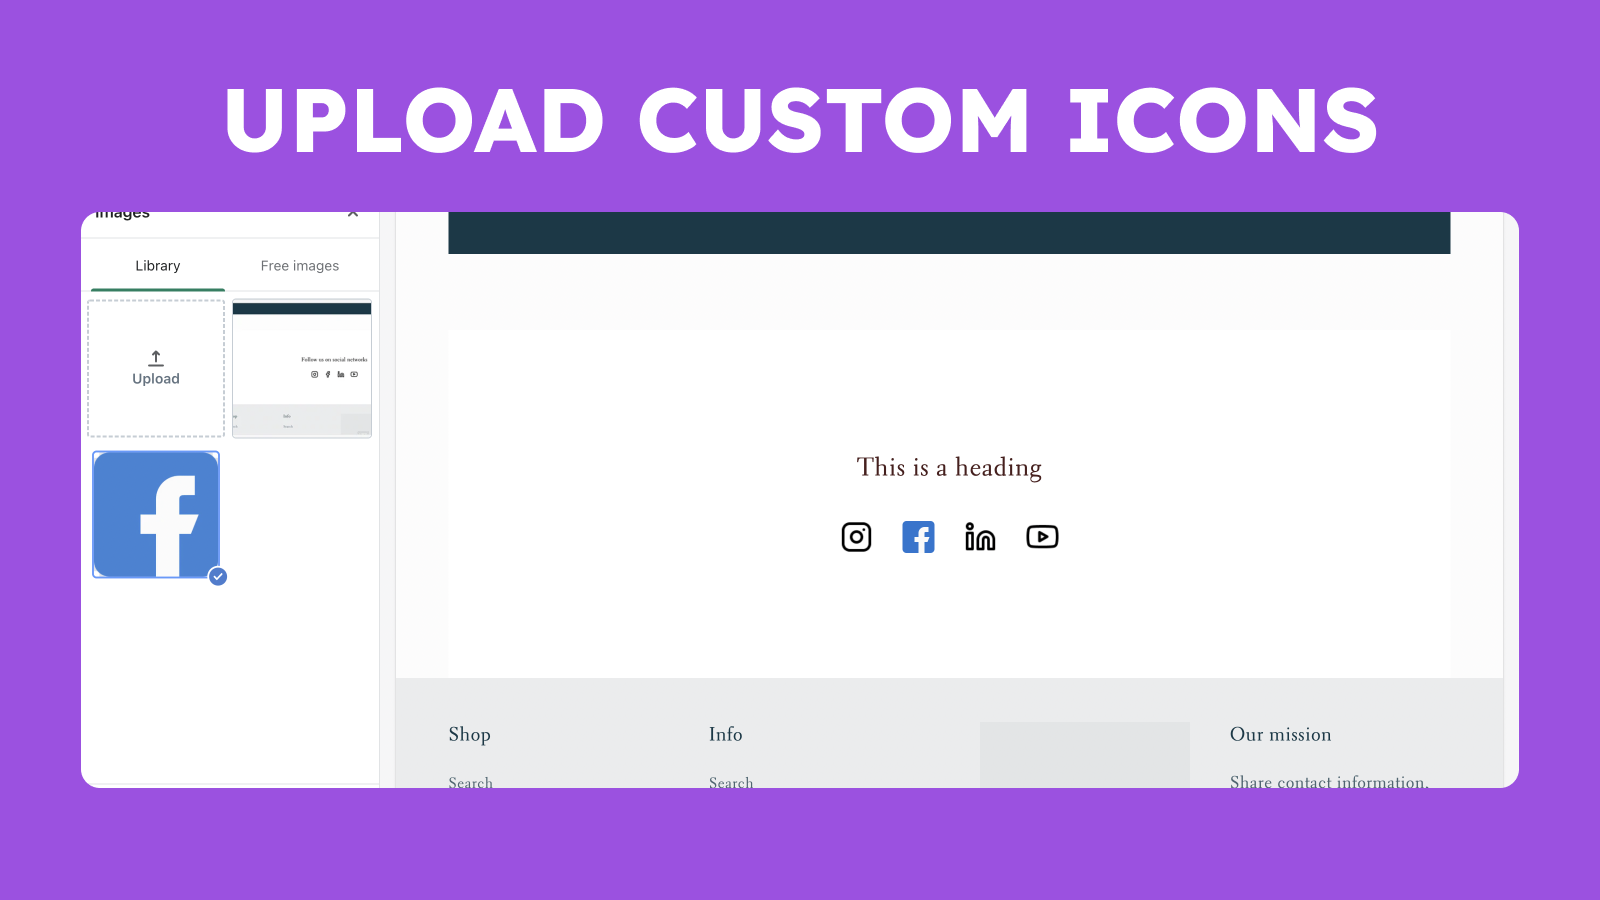 Floox Social Networks Easy app - Upload your custom icons